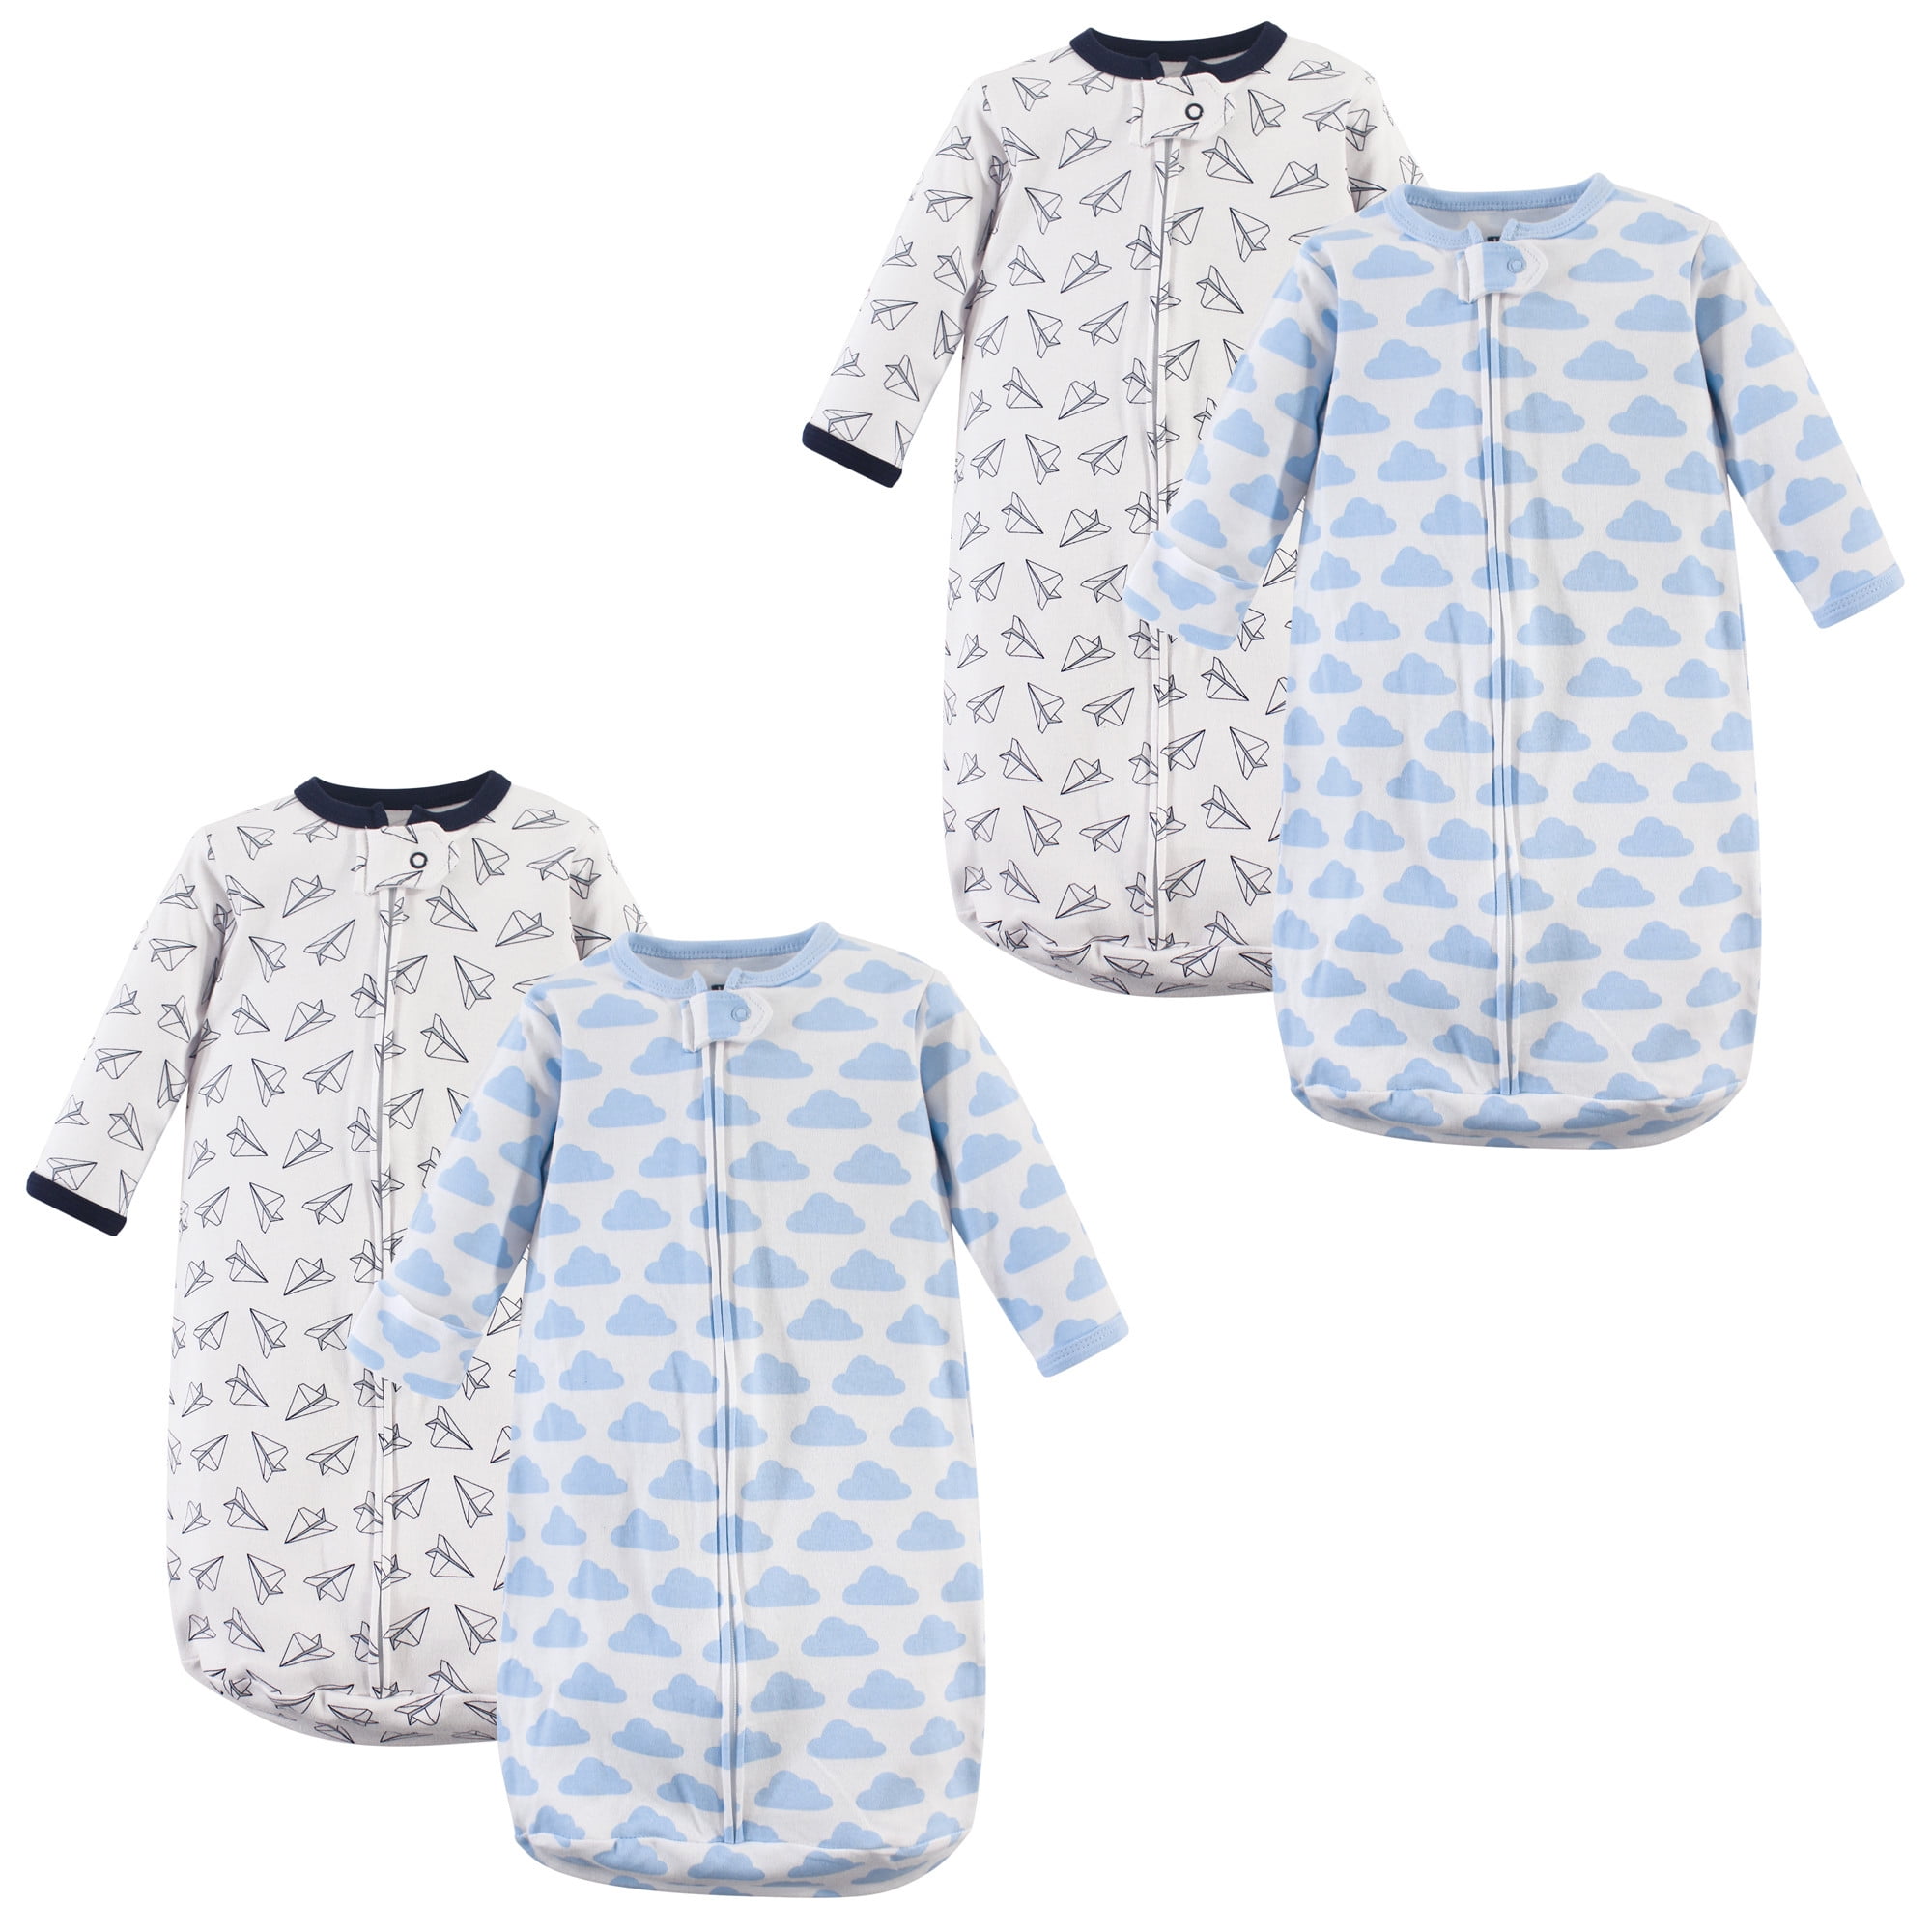 Hudson Baby Unisex Baby Long Sleeve Wearable Sleeping Bag/Blanket 